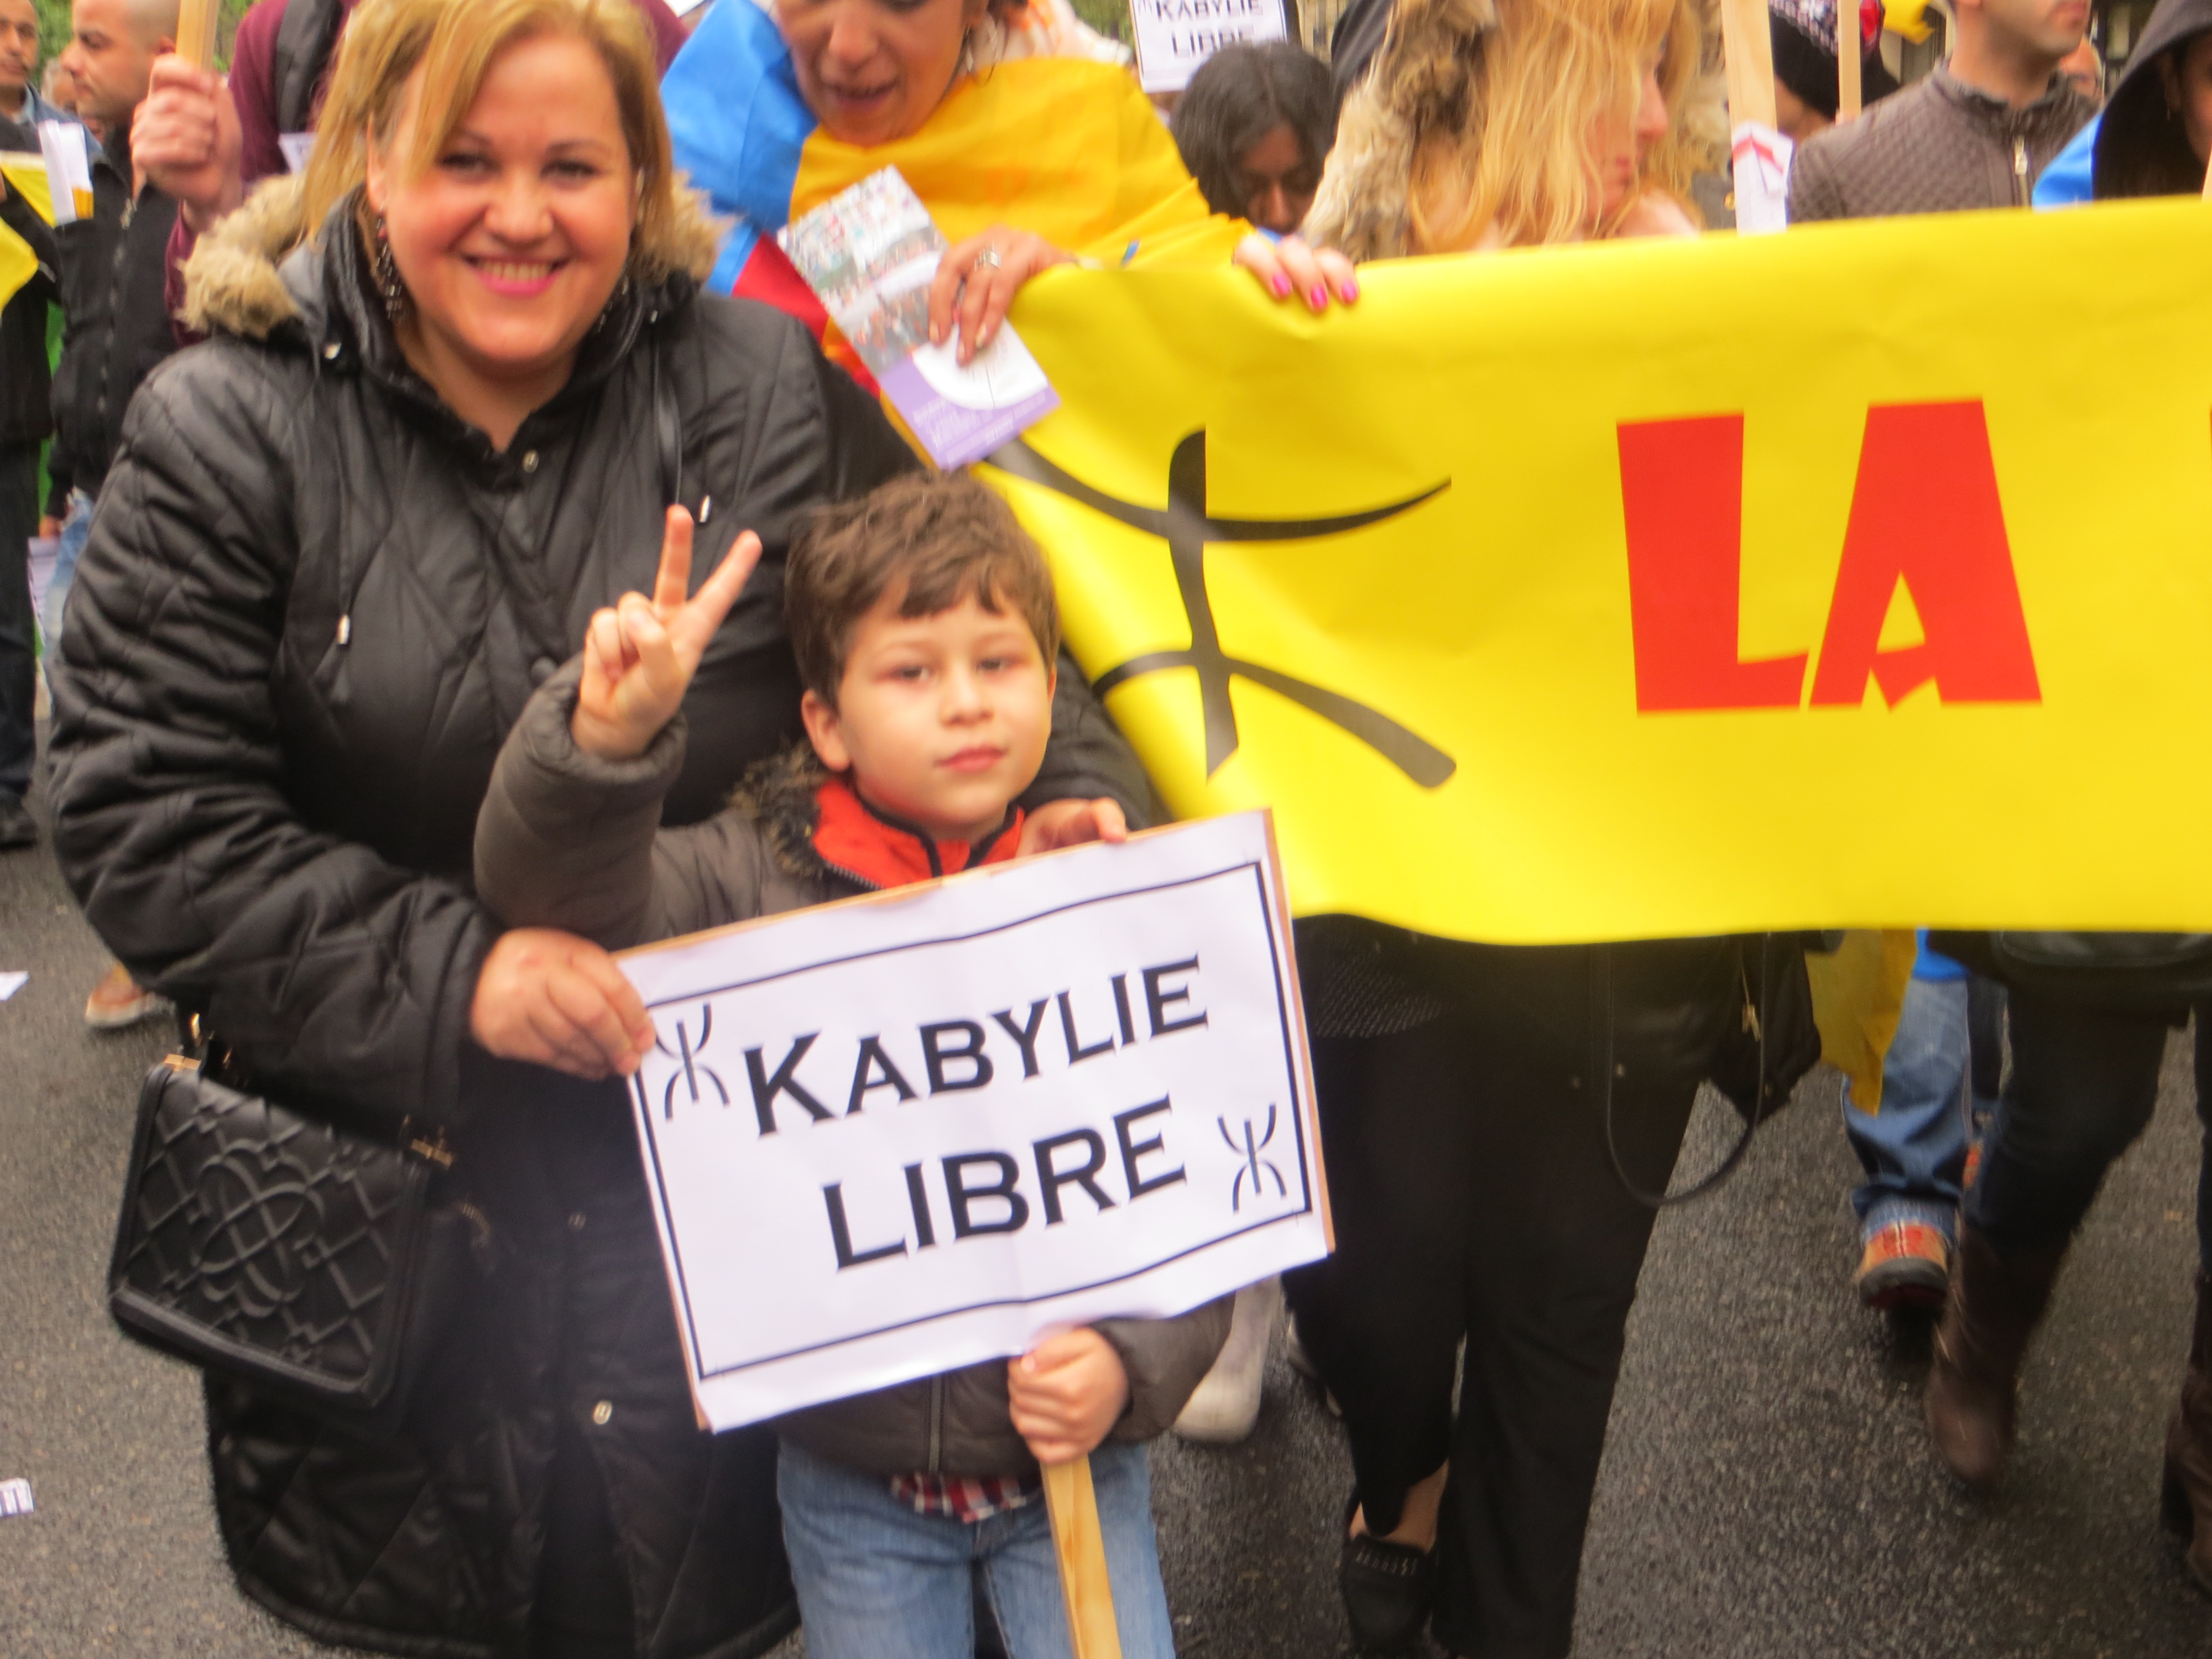 Kabylie libre